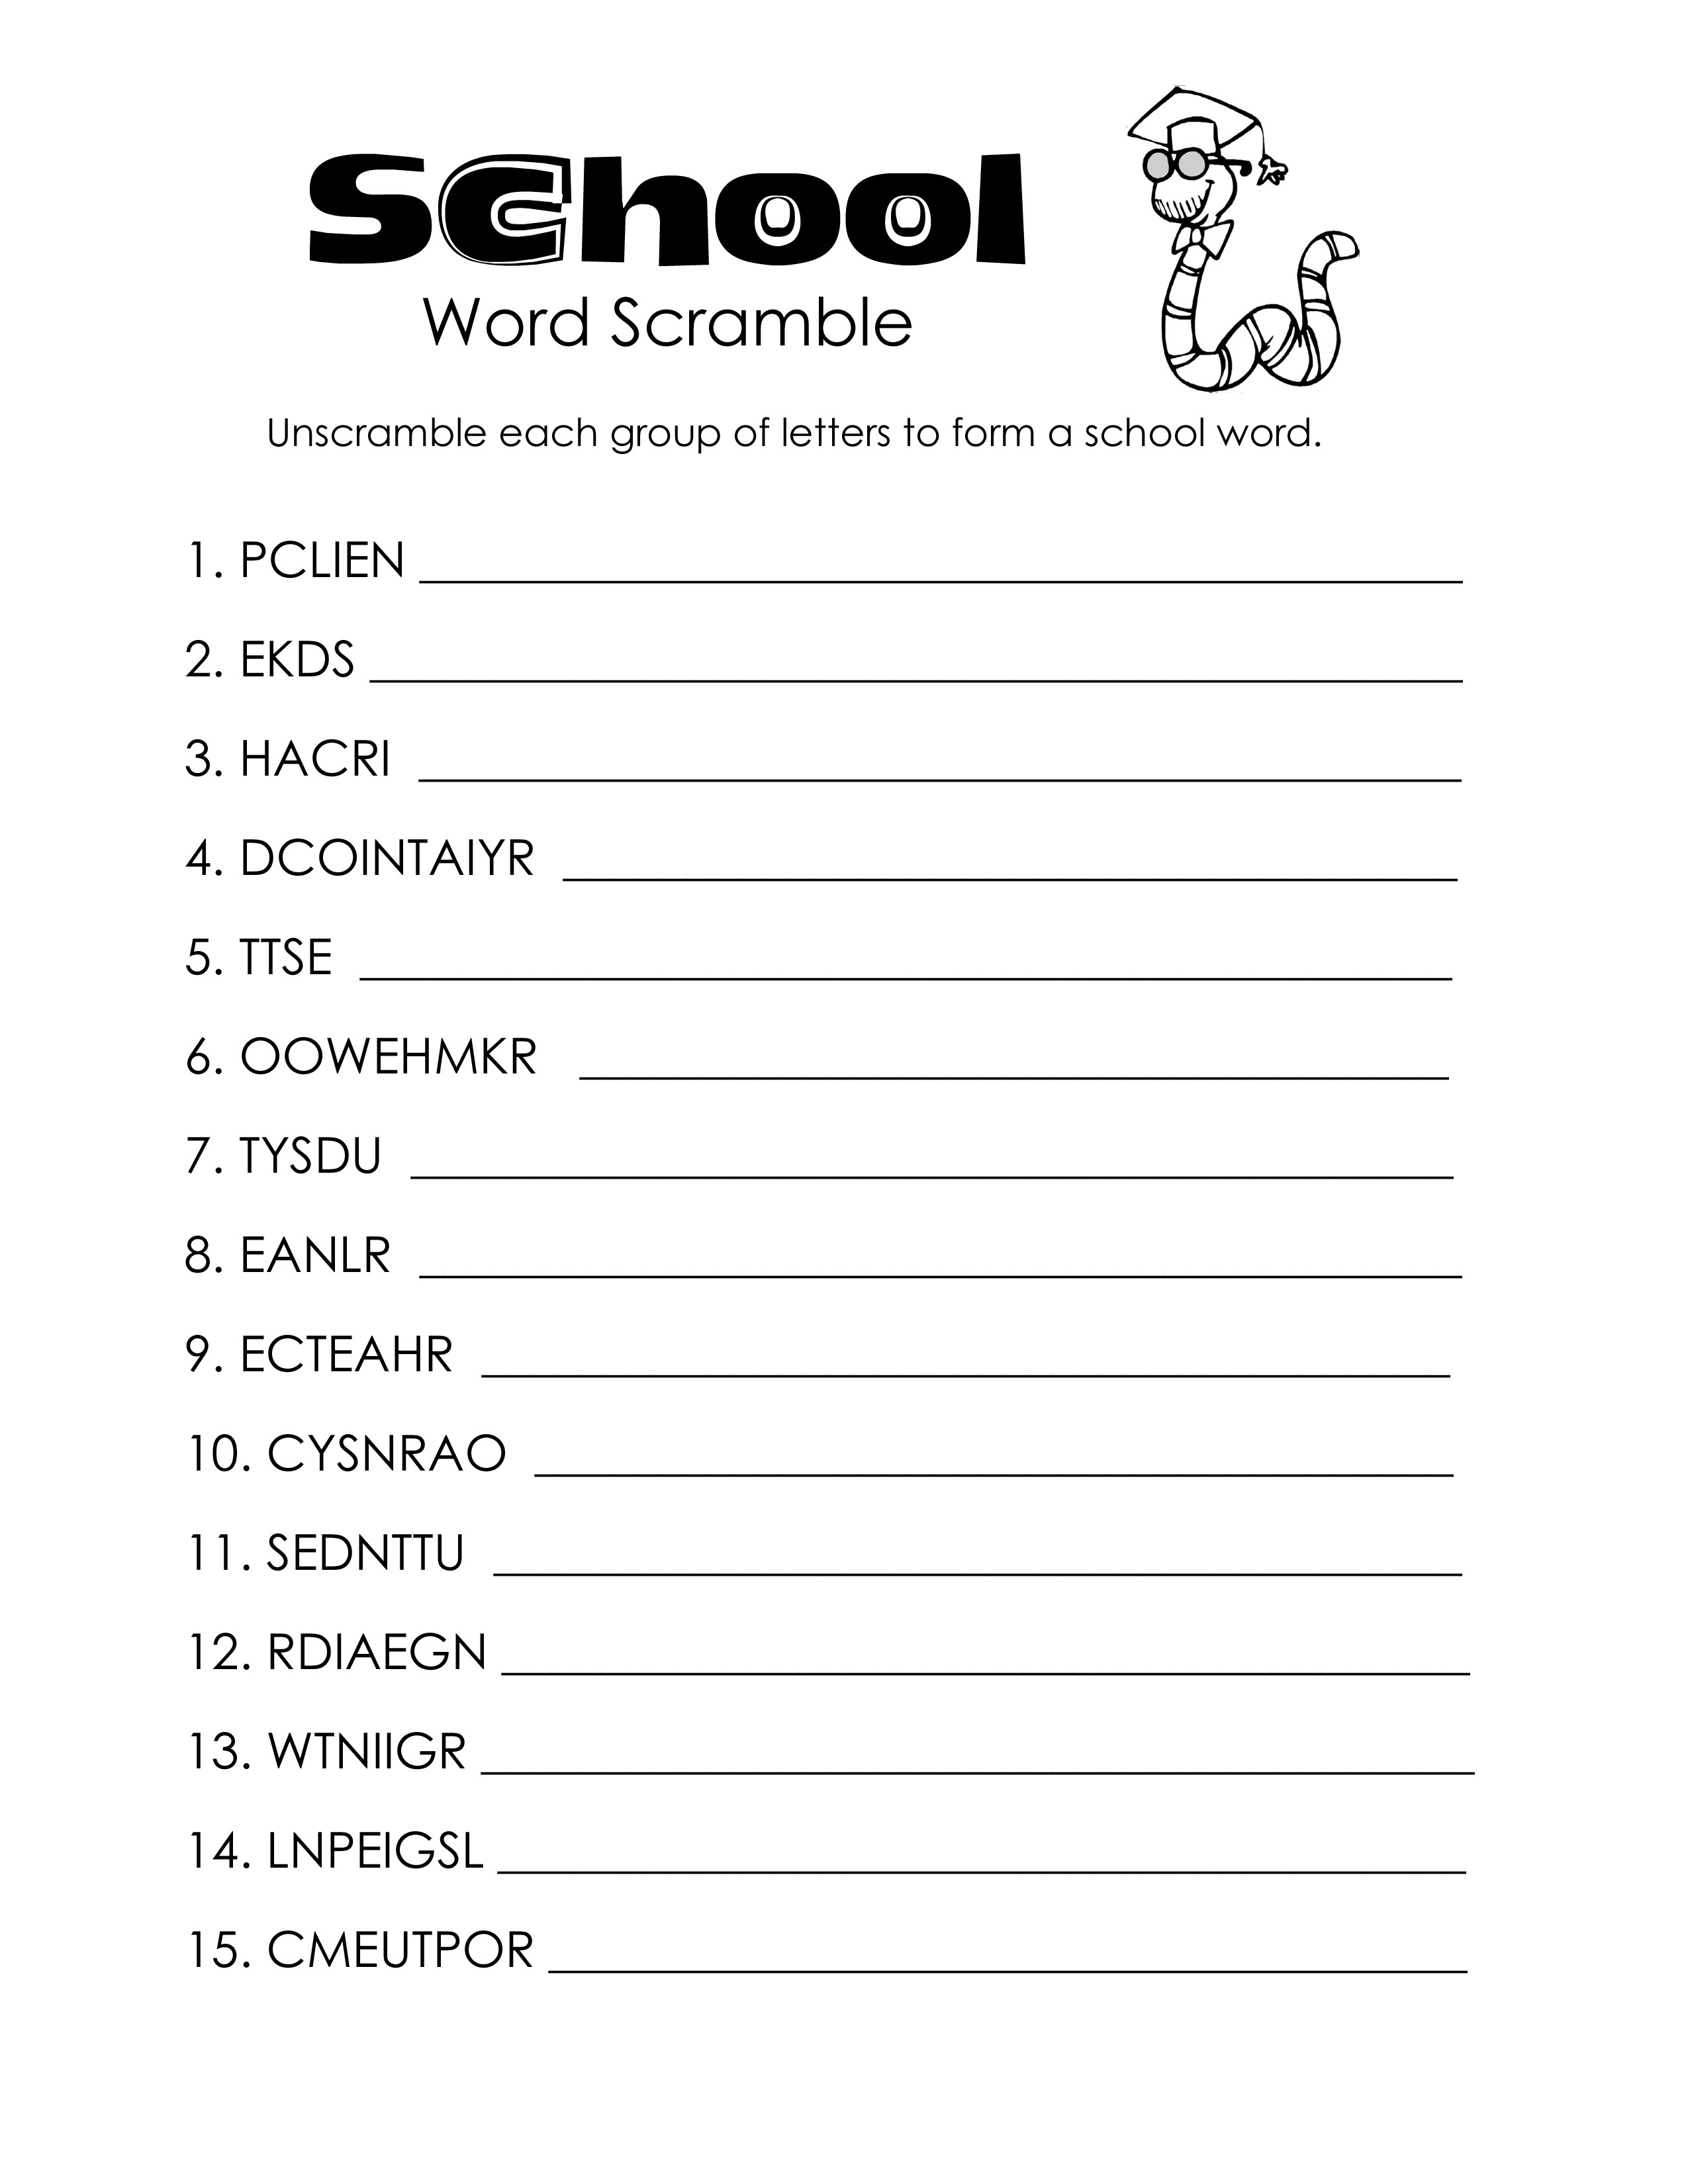 Free Word Scramble Maker Printable | Free Printable